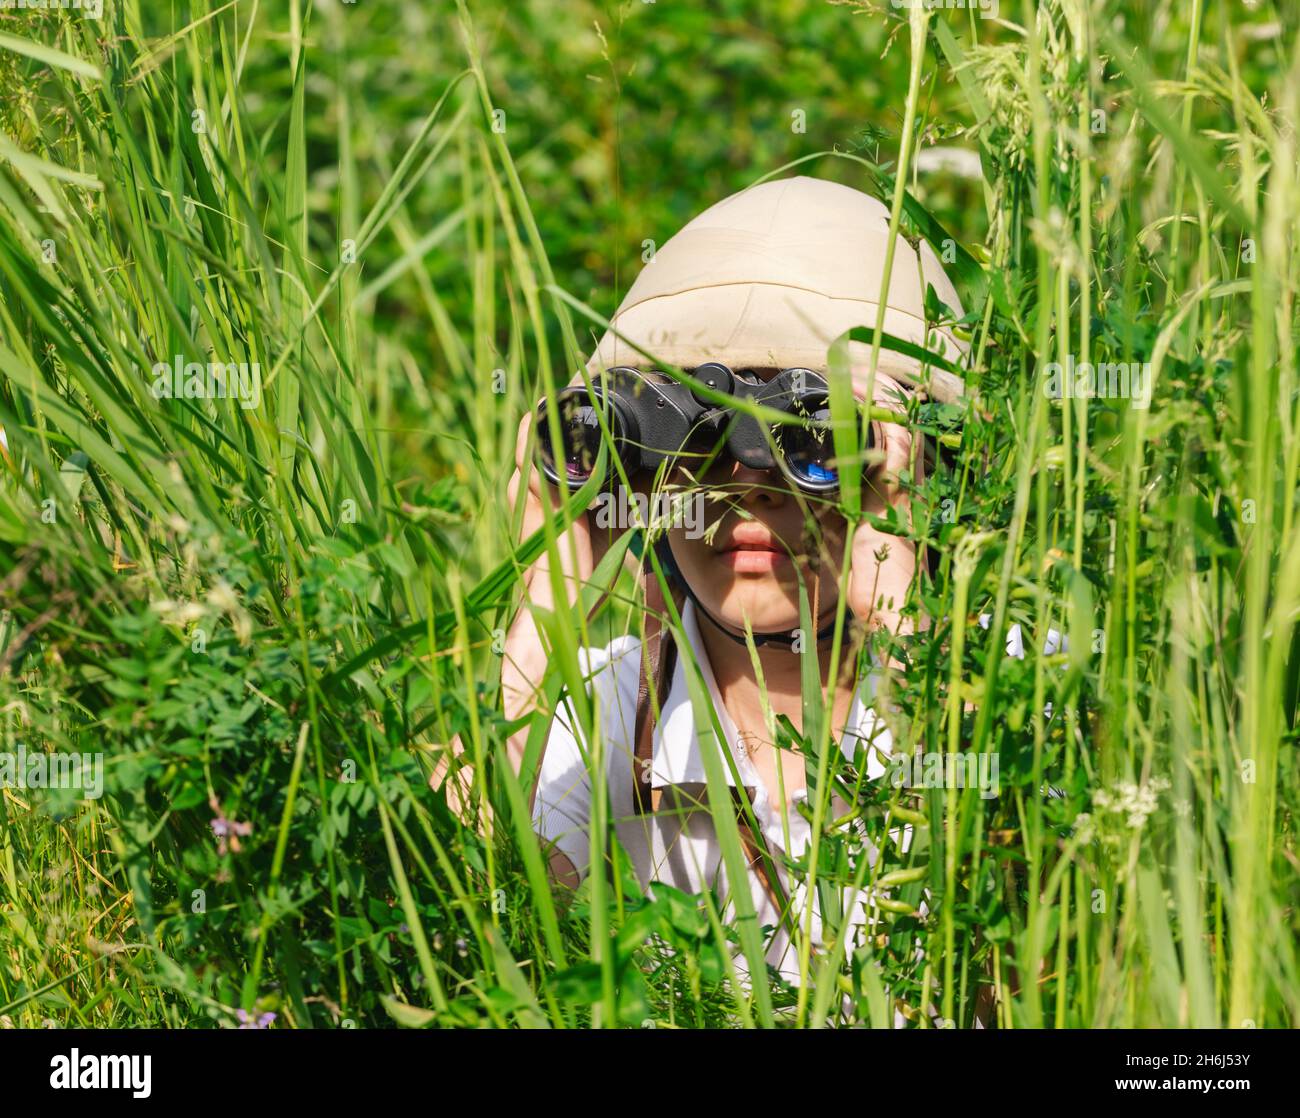 Preteen girl wearing cork helmet hiding in the grass looking through binoculars. Discovery concept Stock Photo